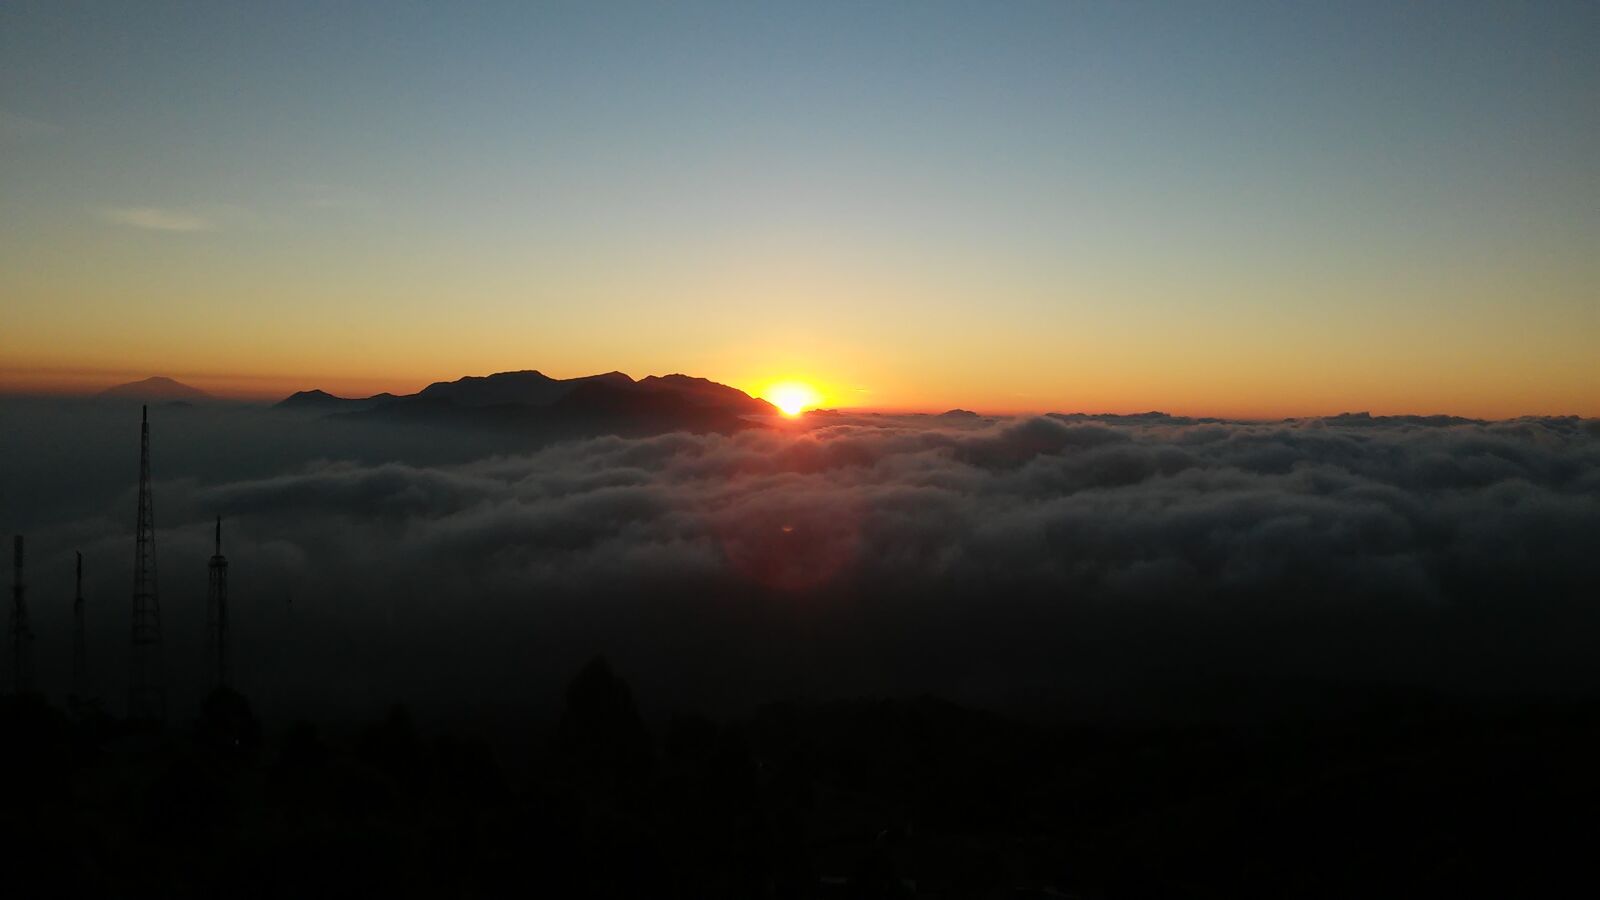 LG G2 MINI sample photo. Sunrise, mountain, landscape photography